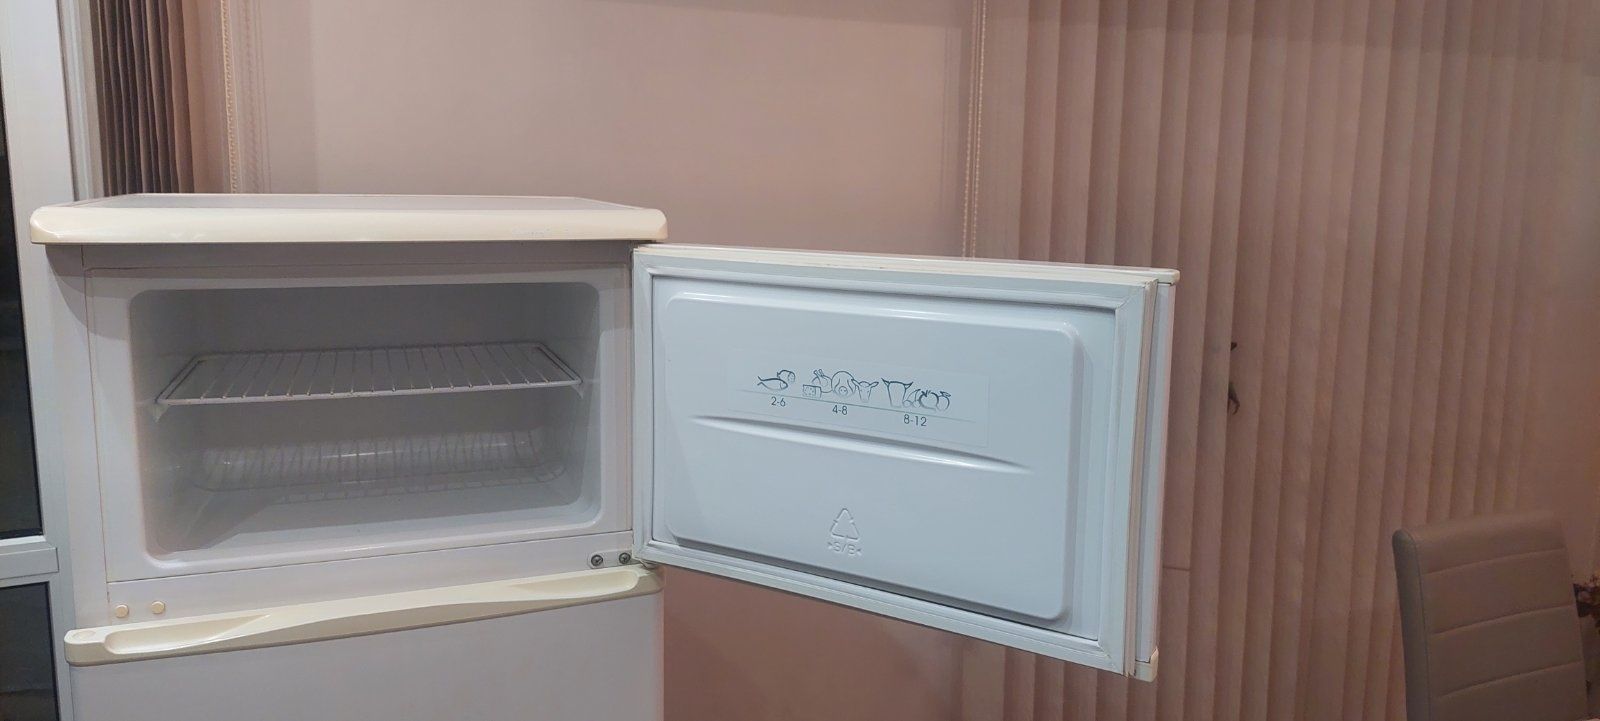 Хладилник Снайге